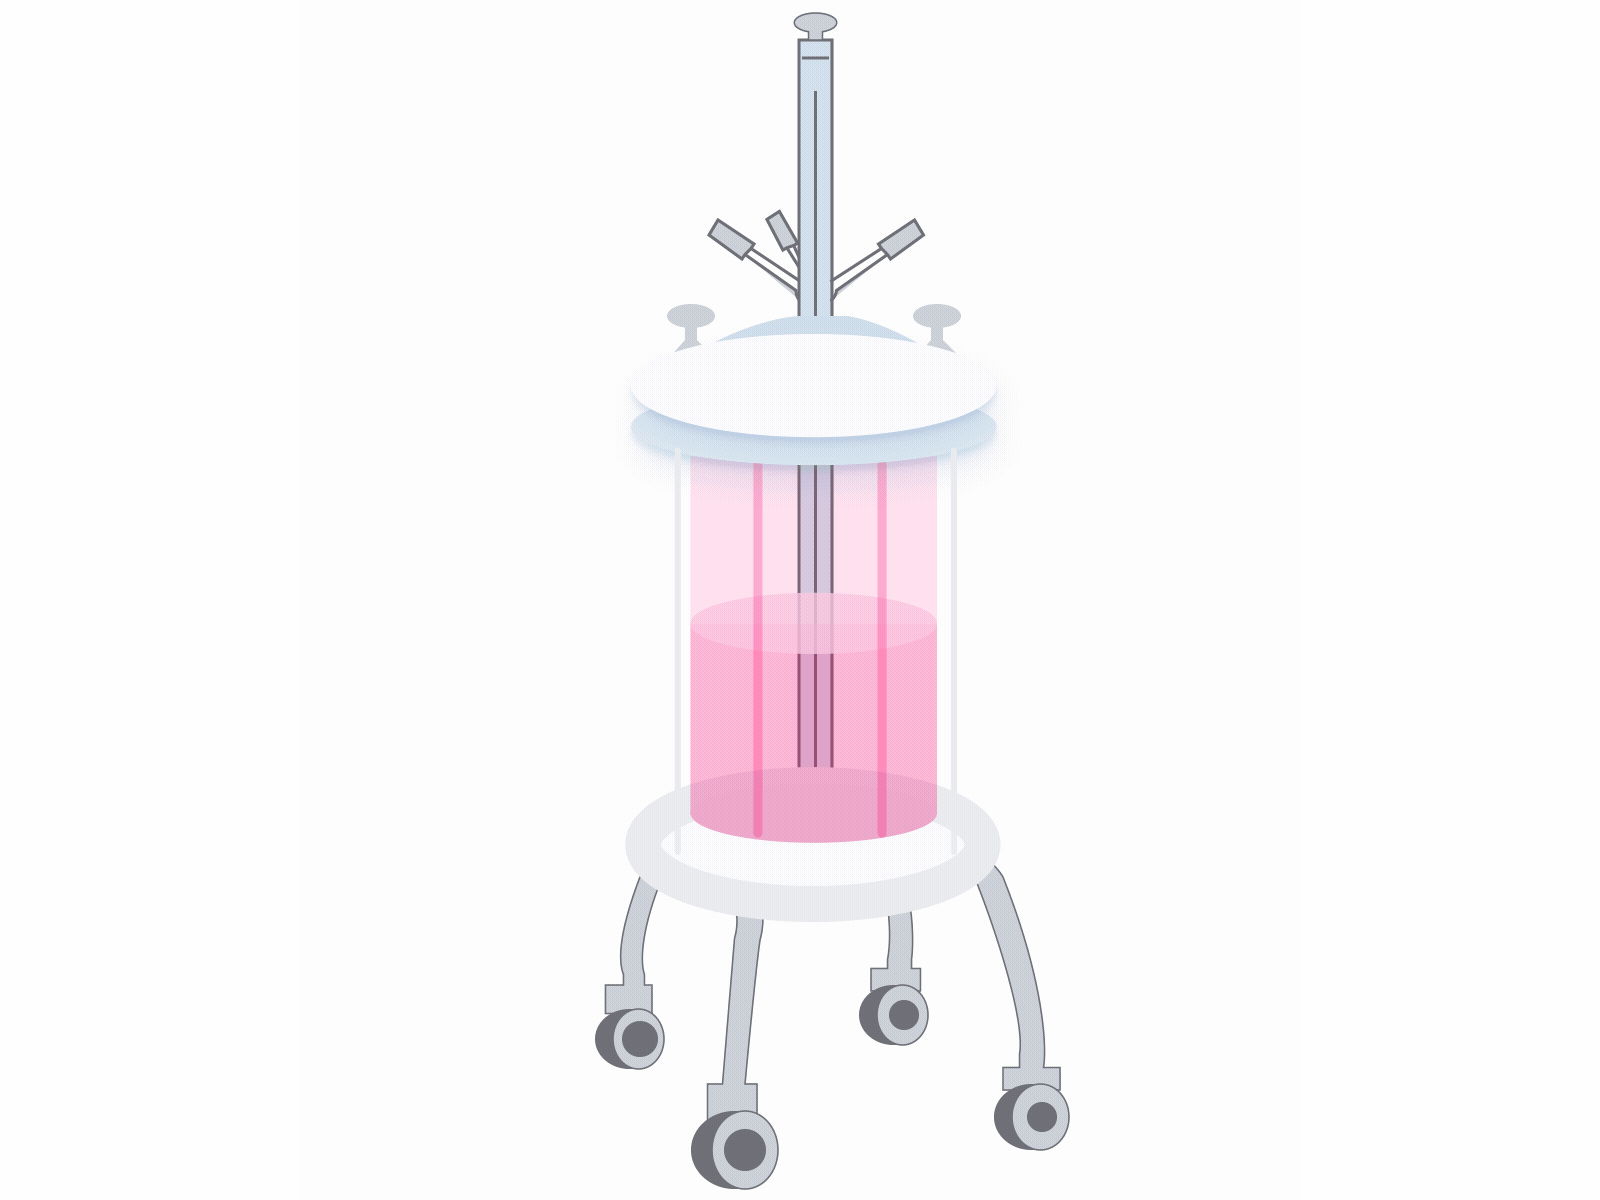 Bioreactor after effects animation biology fake3d lottie кreactor